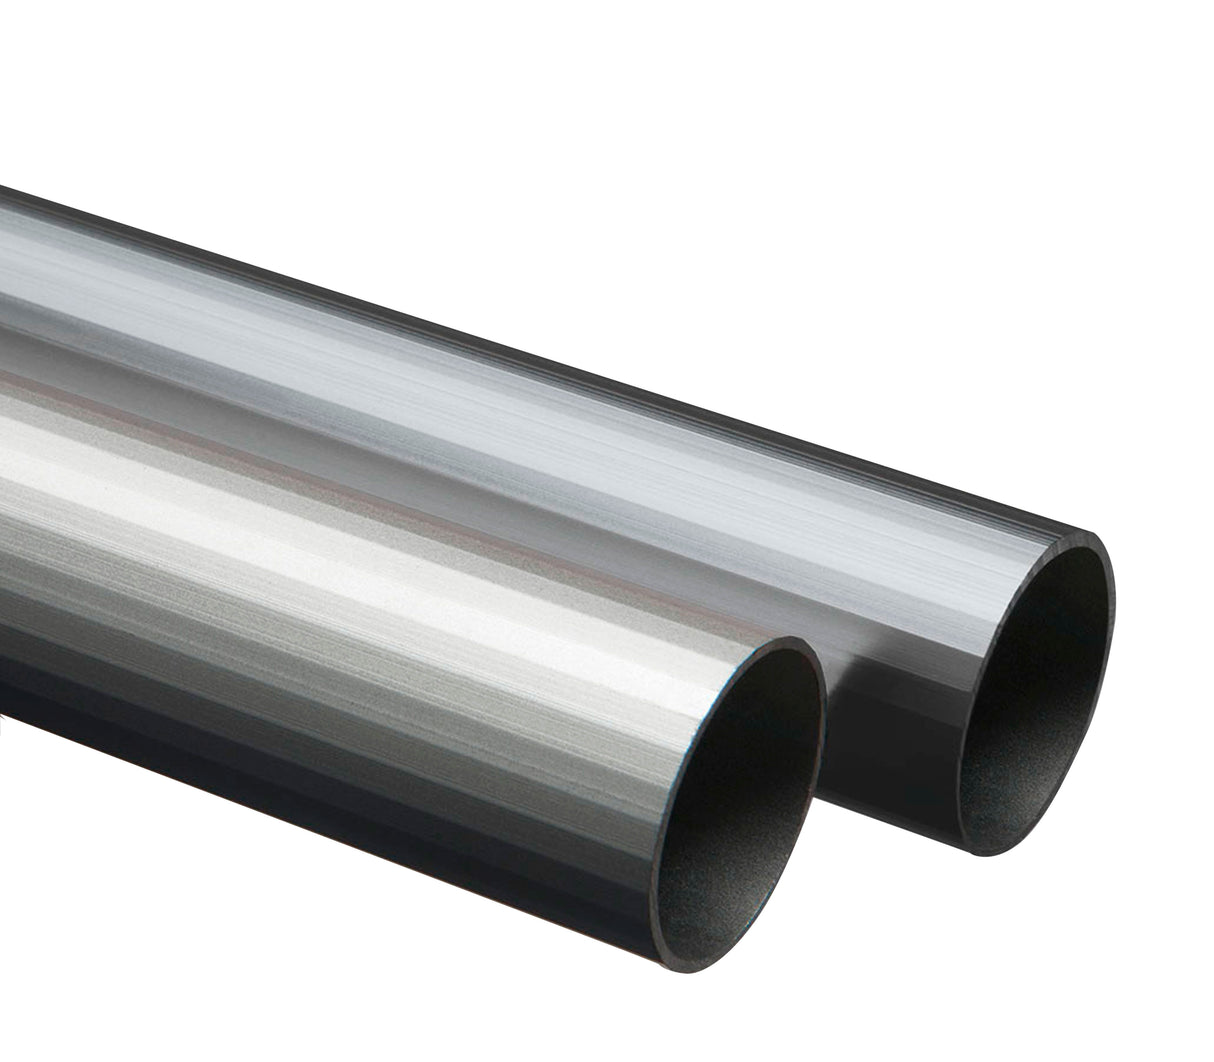 Tubo redondo de aluminio 30x1.4 mm x 2.98 metros